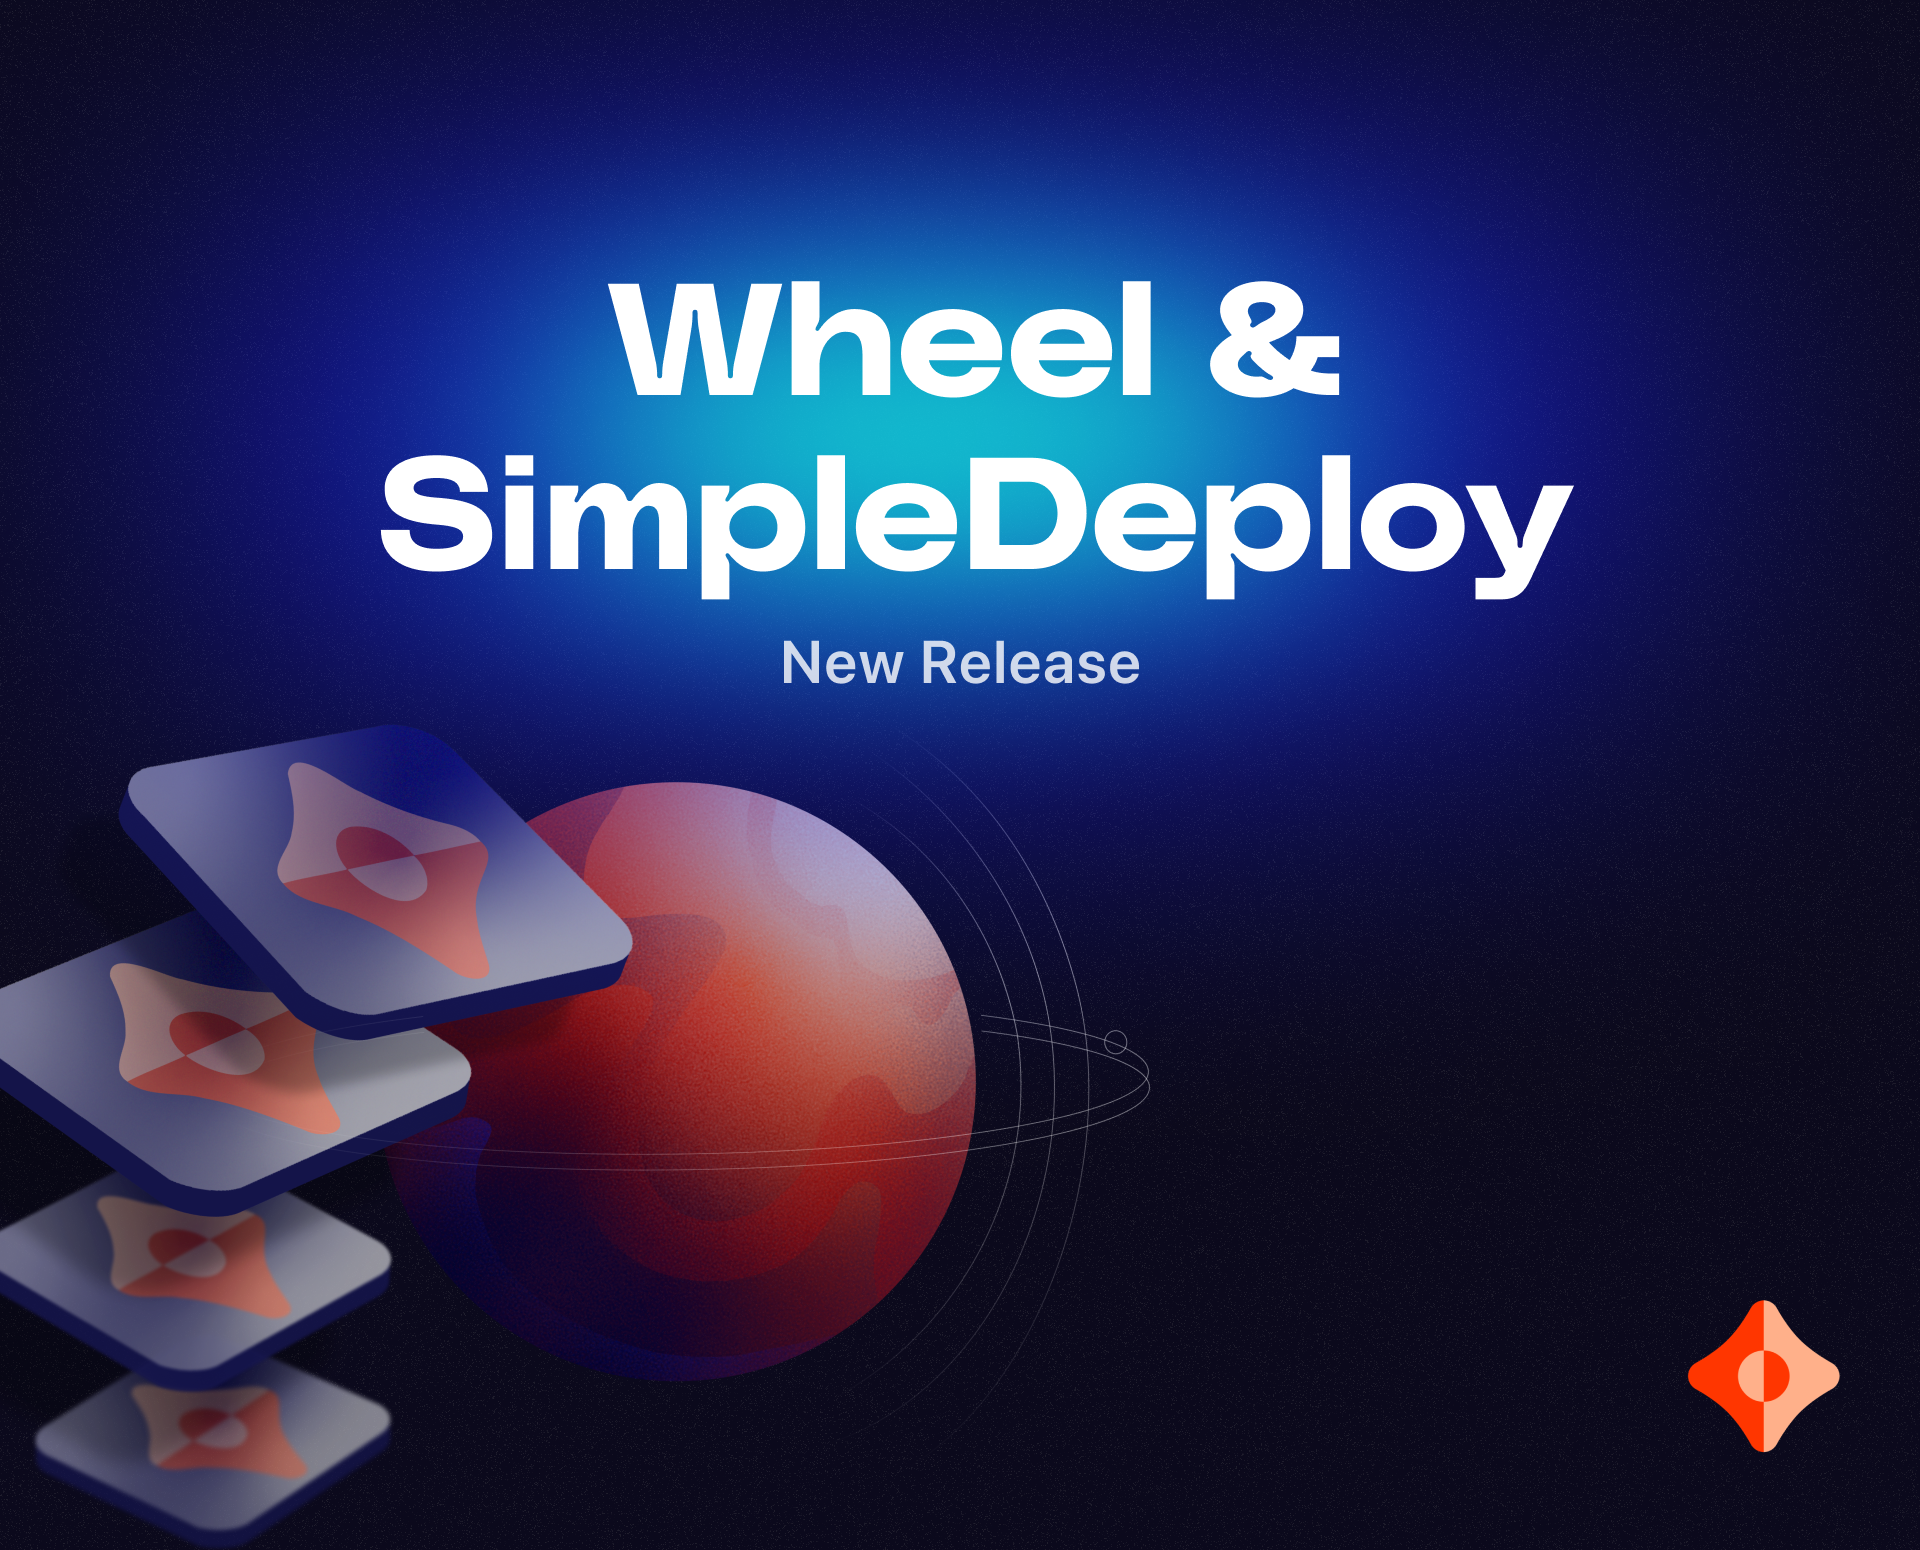 Streamlining Ceramic and ComposeDB Setups With Wheel & SimpleDeploy